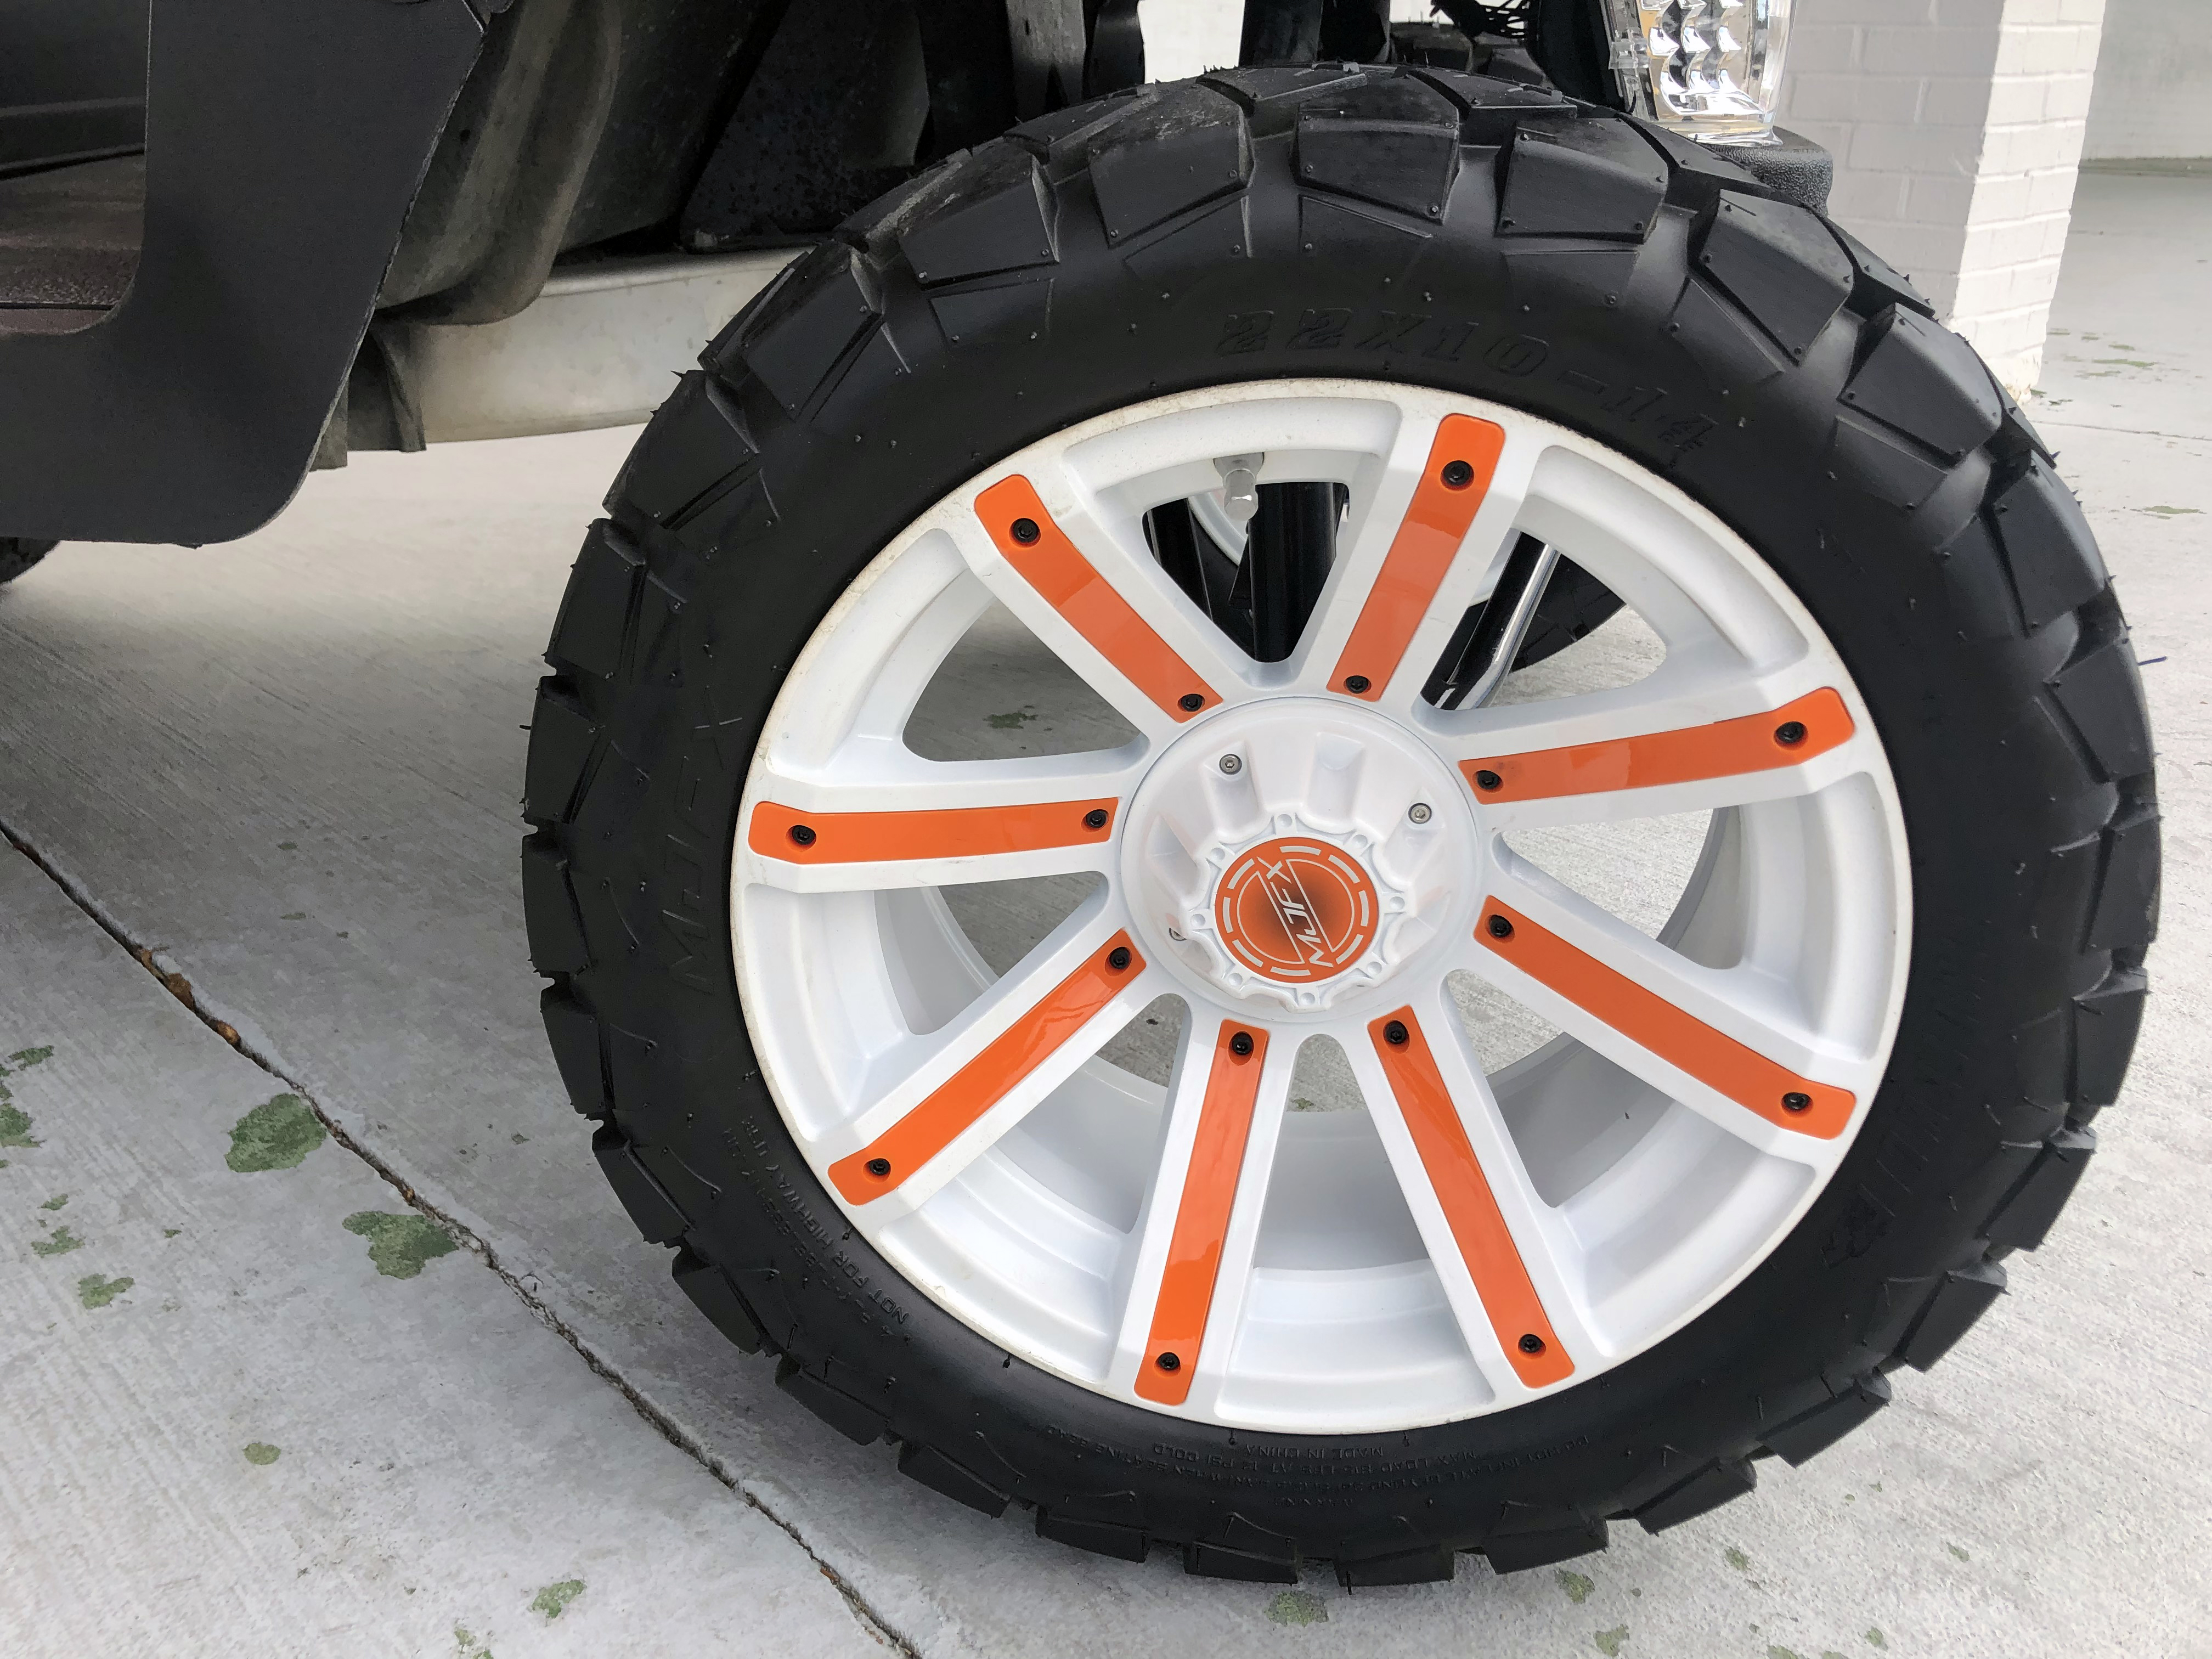 14 Inch Avenger Wheels with Orange Inserts